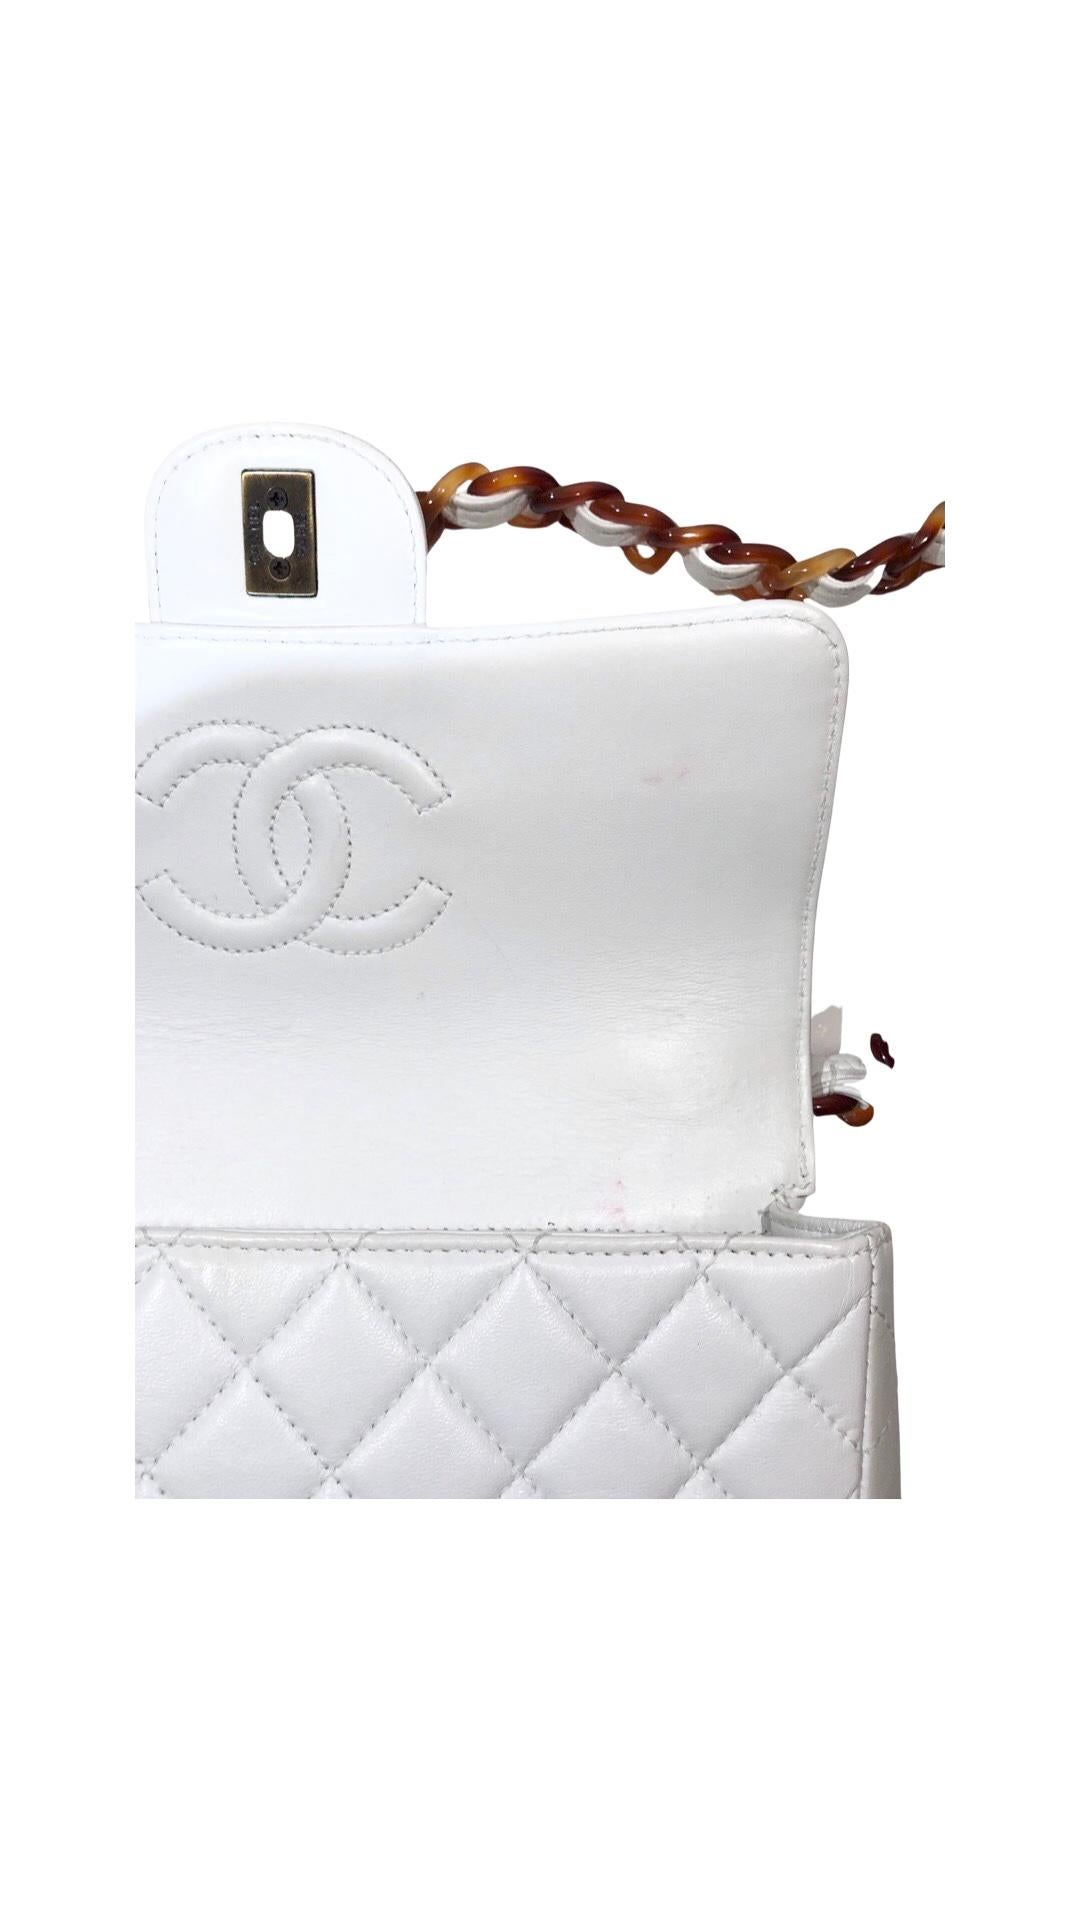 Vintage Ladies White Clutch Handbag Nicely Beaded Handle on Back 441